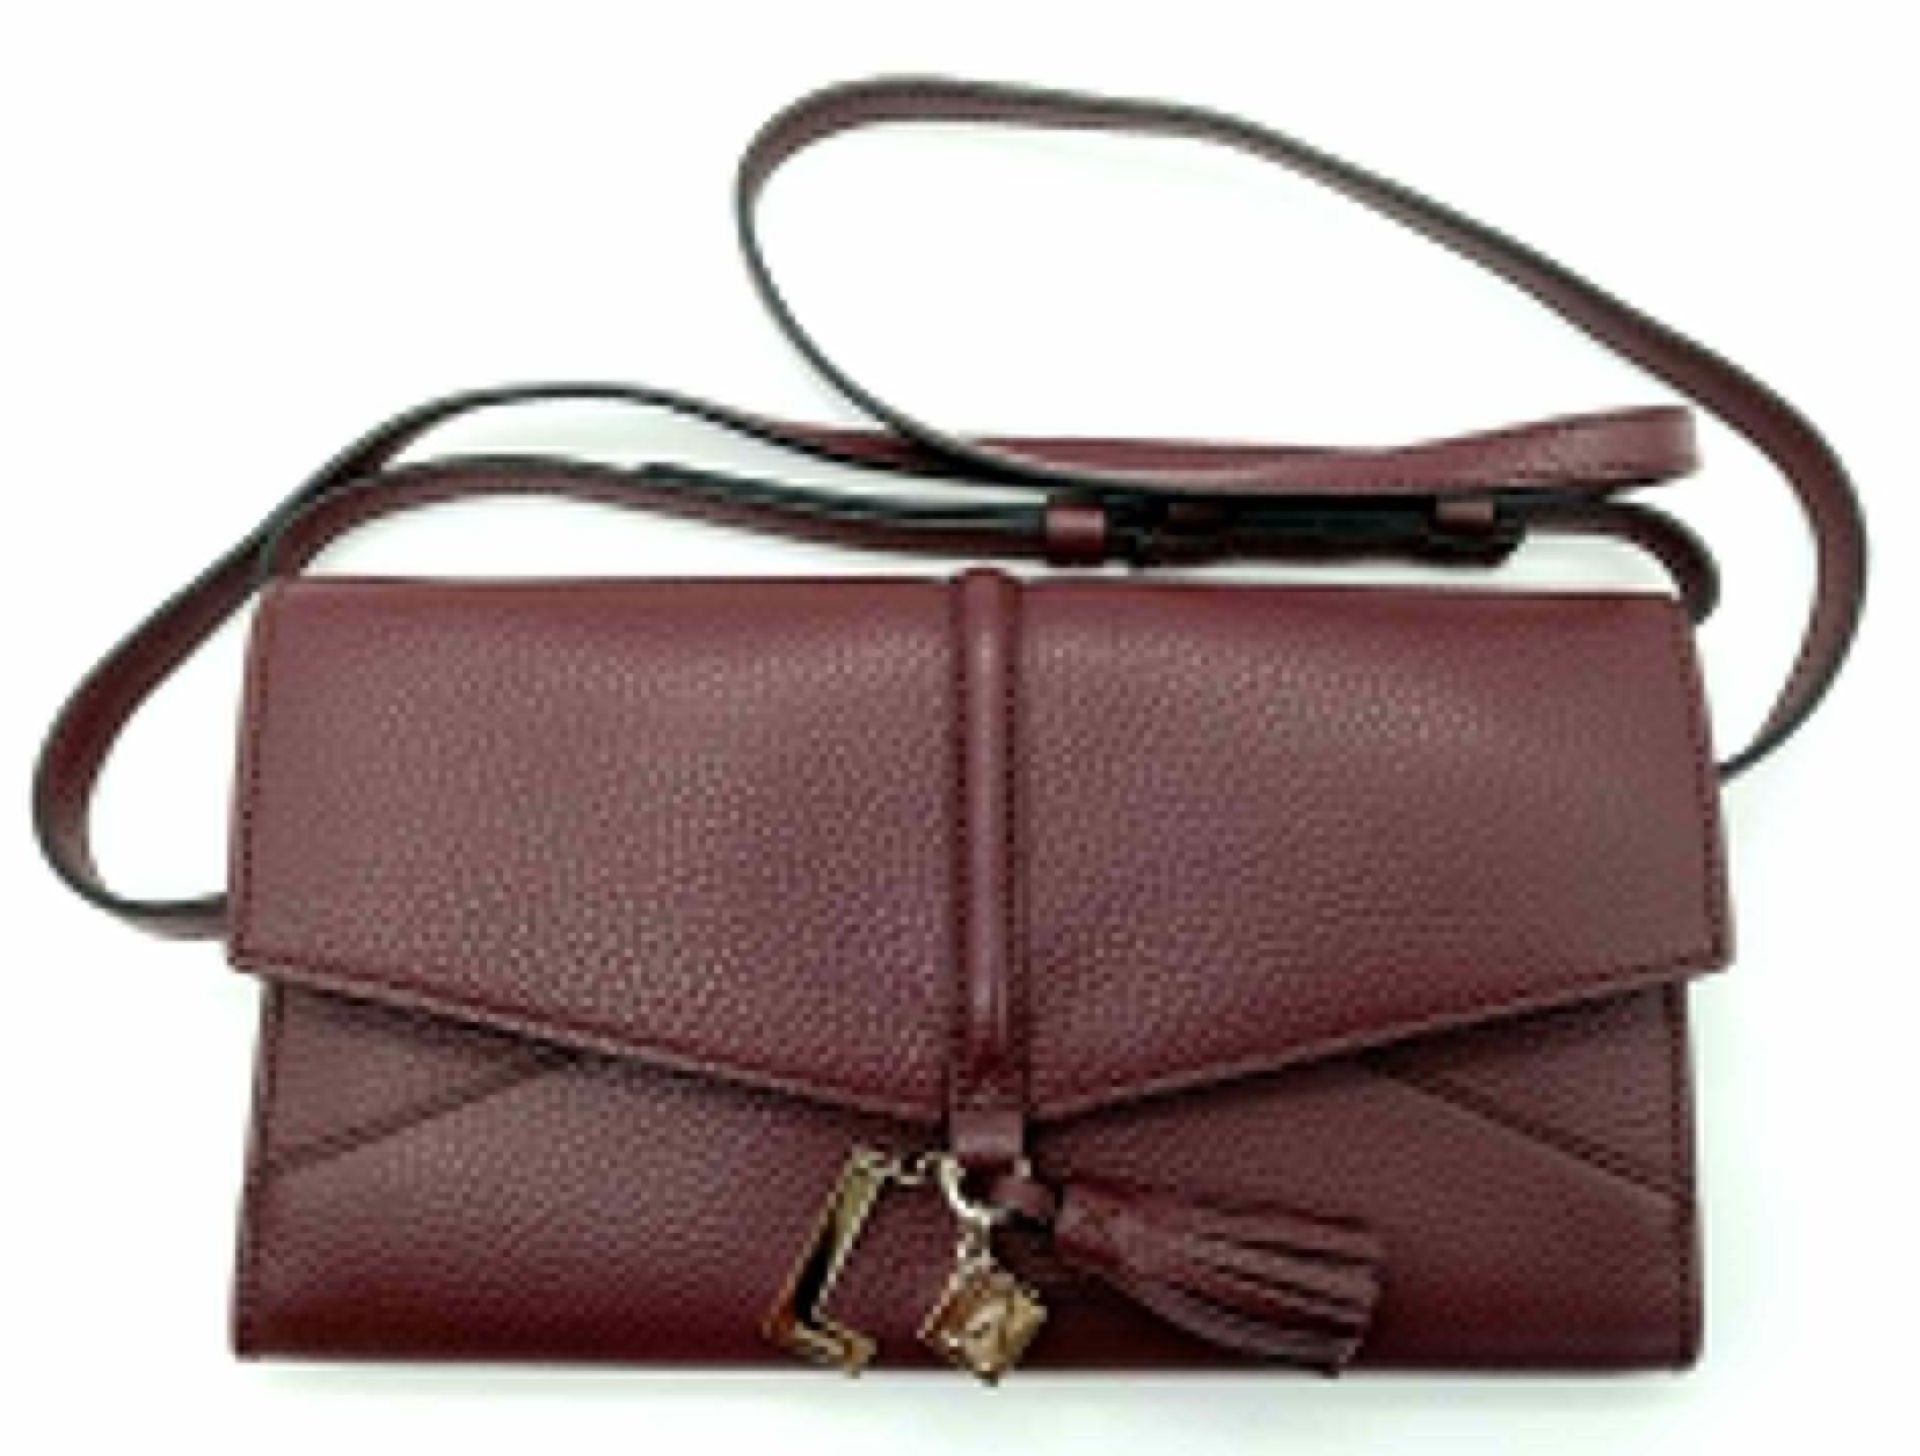 A Lance Burgundy Leather Hand/Shoulder Flap Bag. Textured leather exterior. Soft red textile